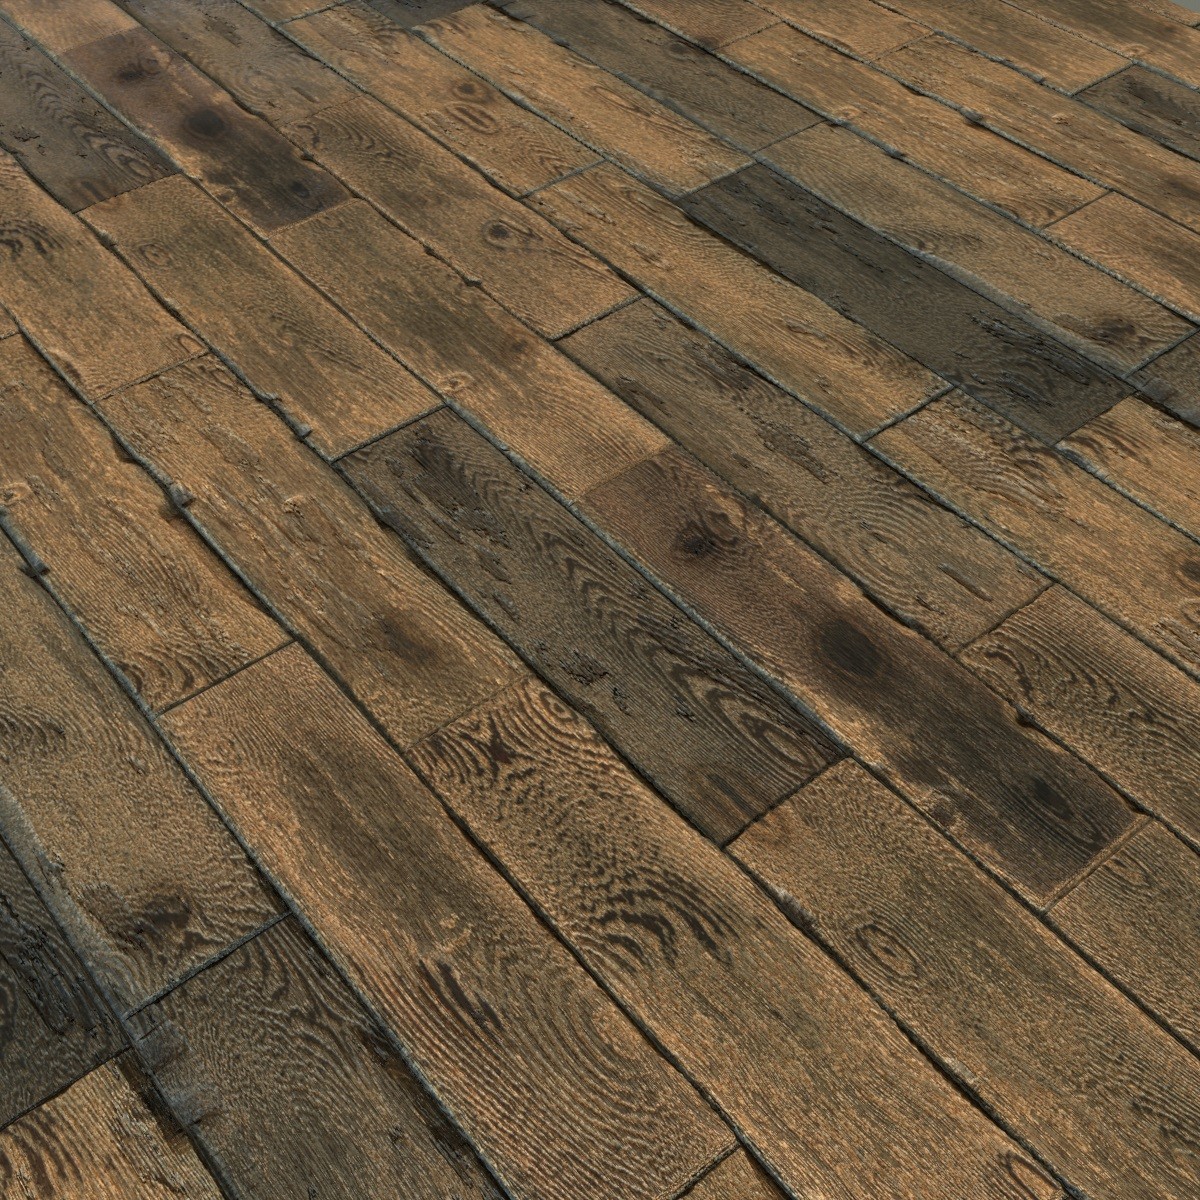 Artstation Worn Wood Floor Game Assets, Surface Source Hardwood Flooring